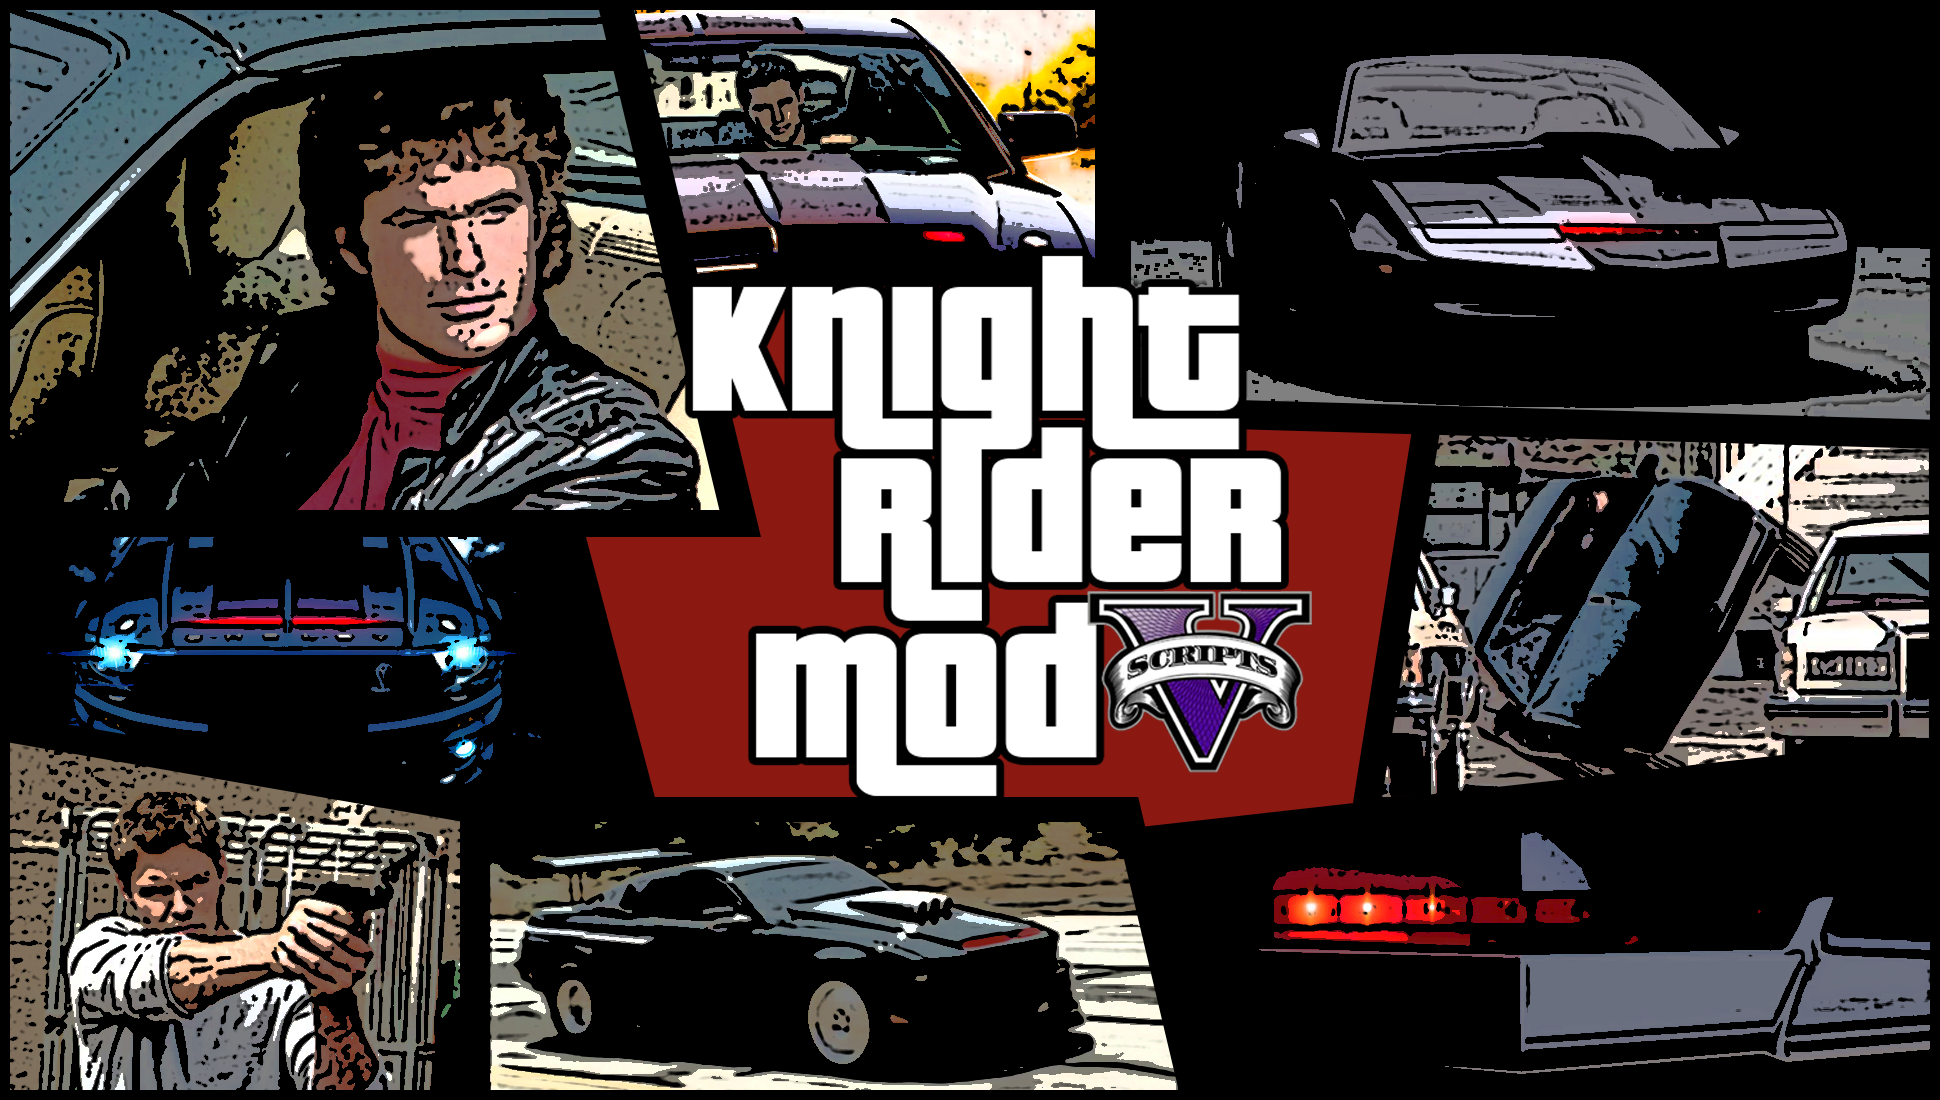 Knight rider video game